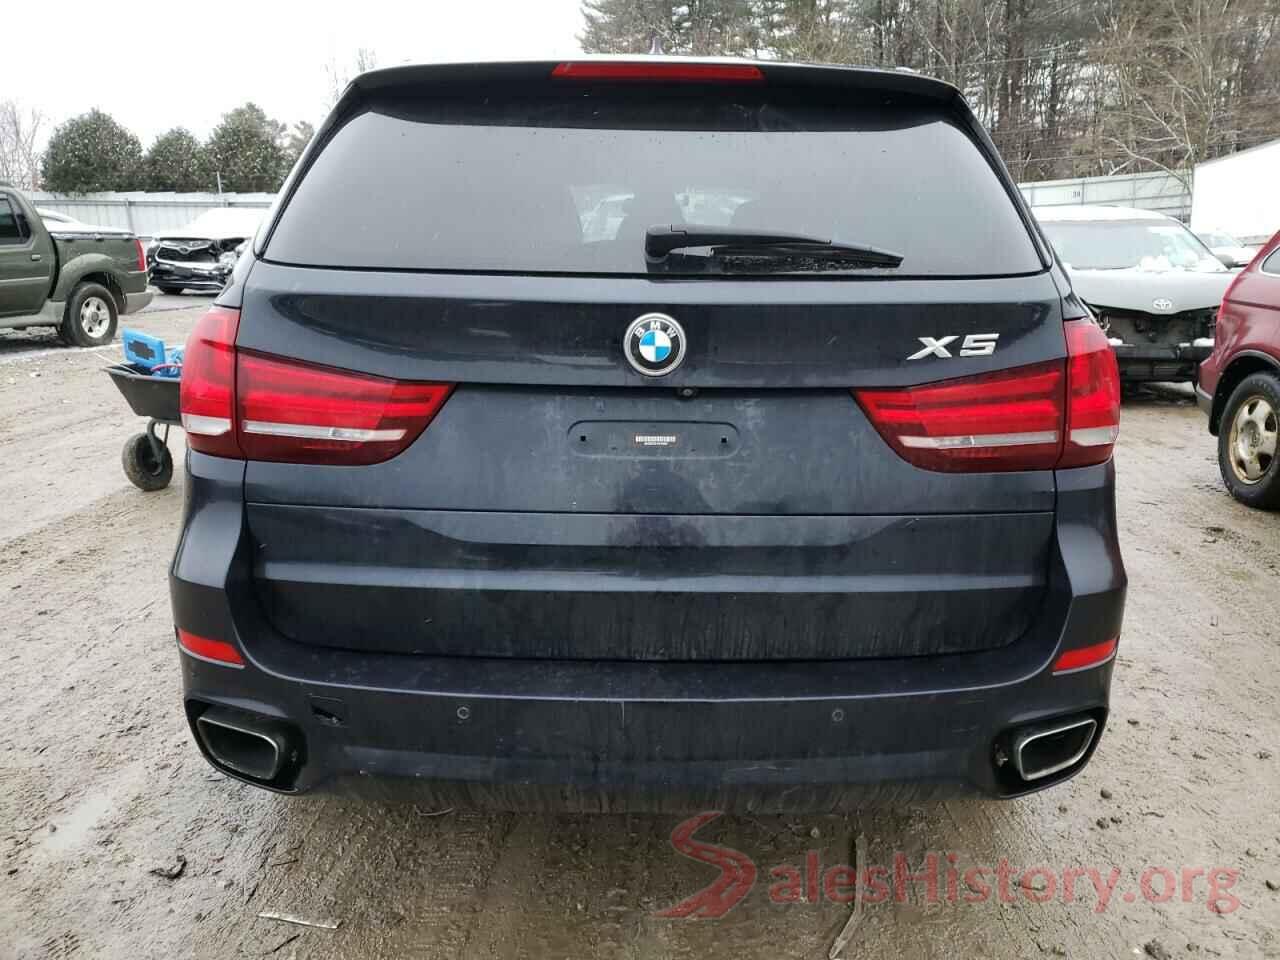 5UXKR0C31H0V70586 2017 BMW X5